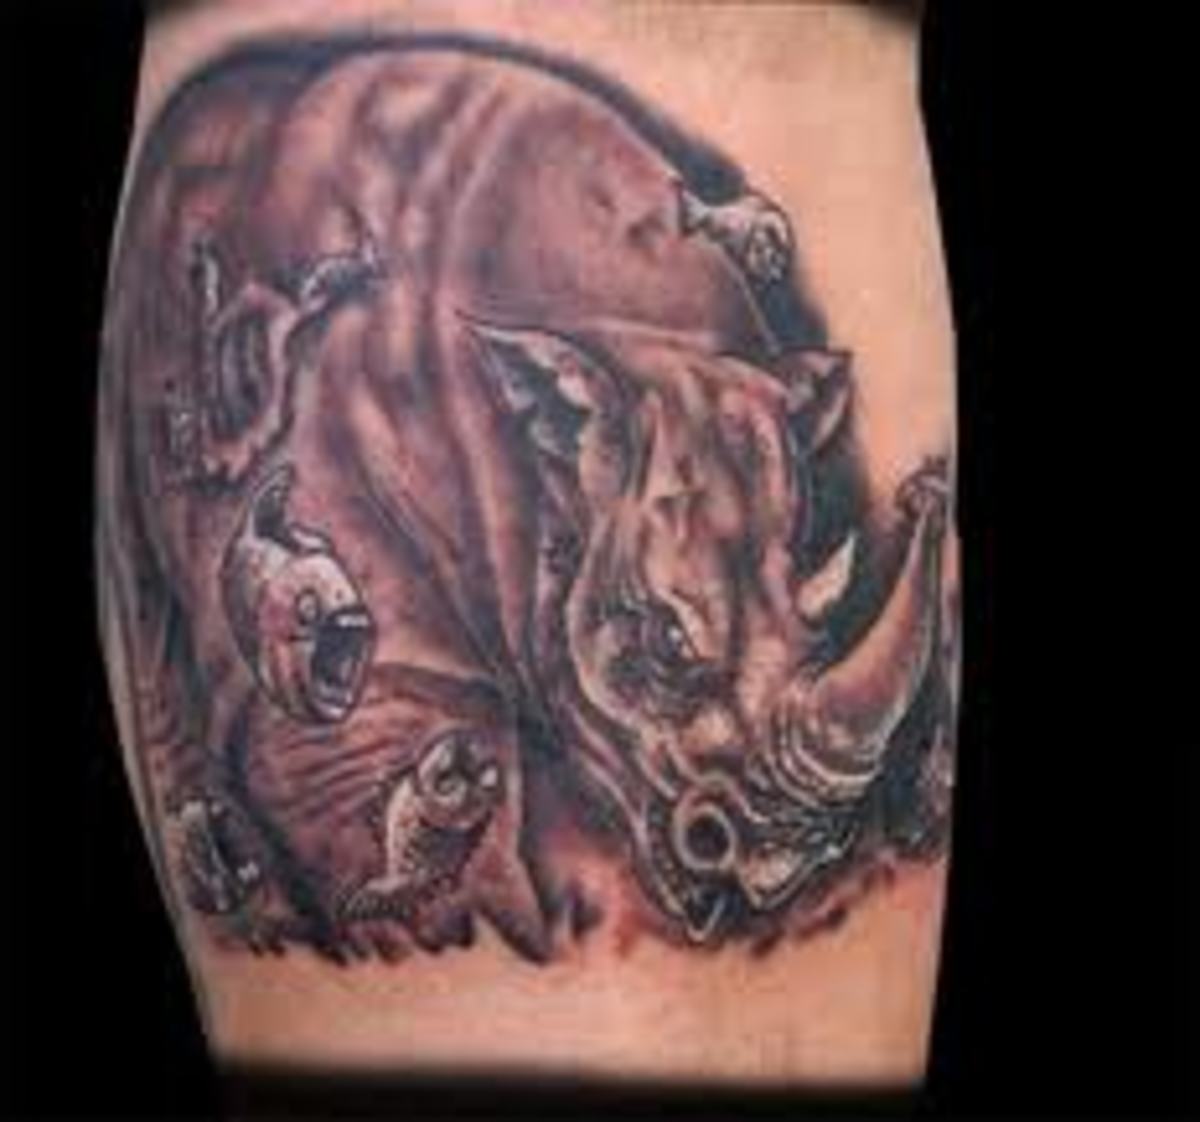 Rhino Tattoos And Designs-Rhino Tattoo Meanings And Ideas-Rhino Tattoo Pictures